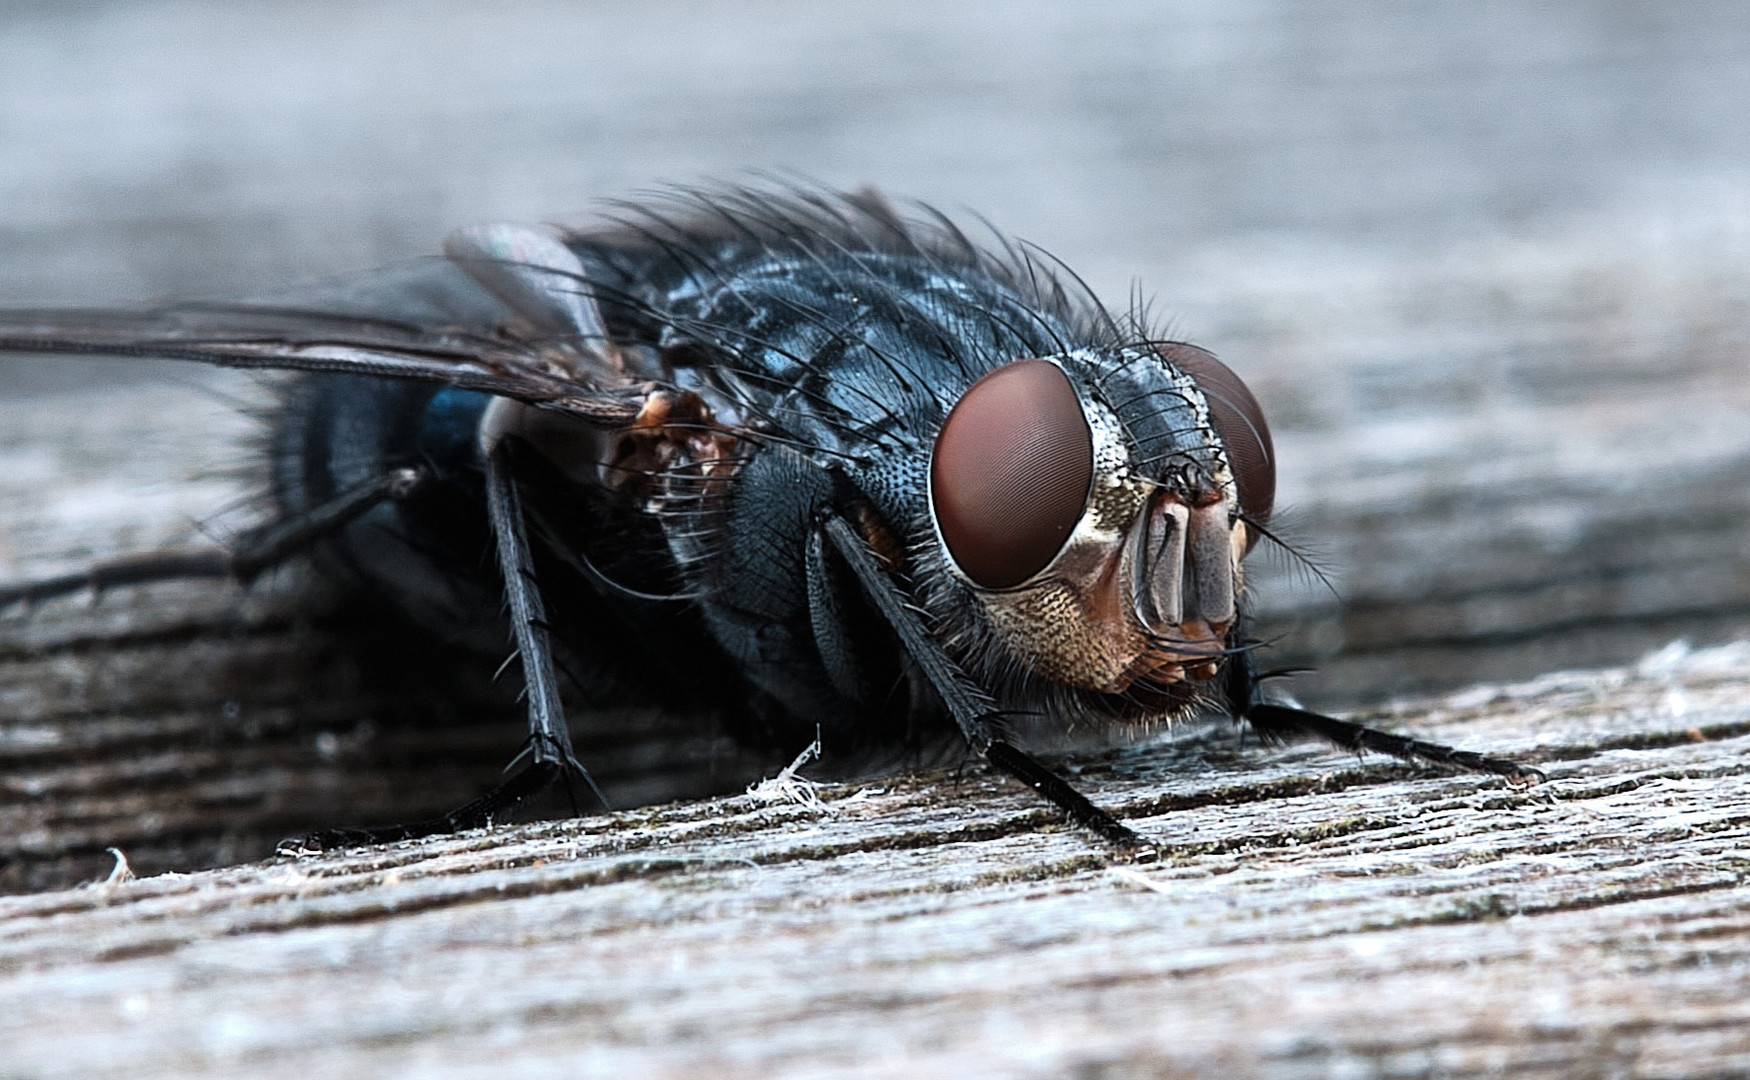 Flies are beautiful ...